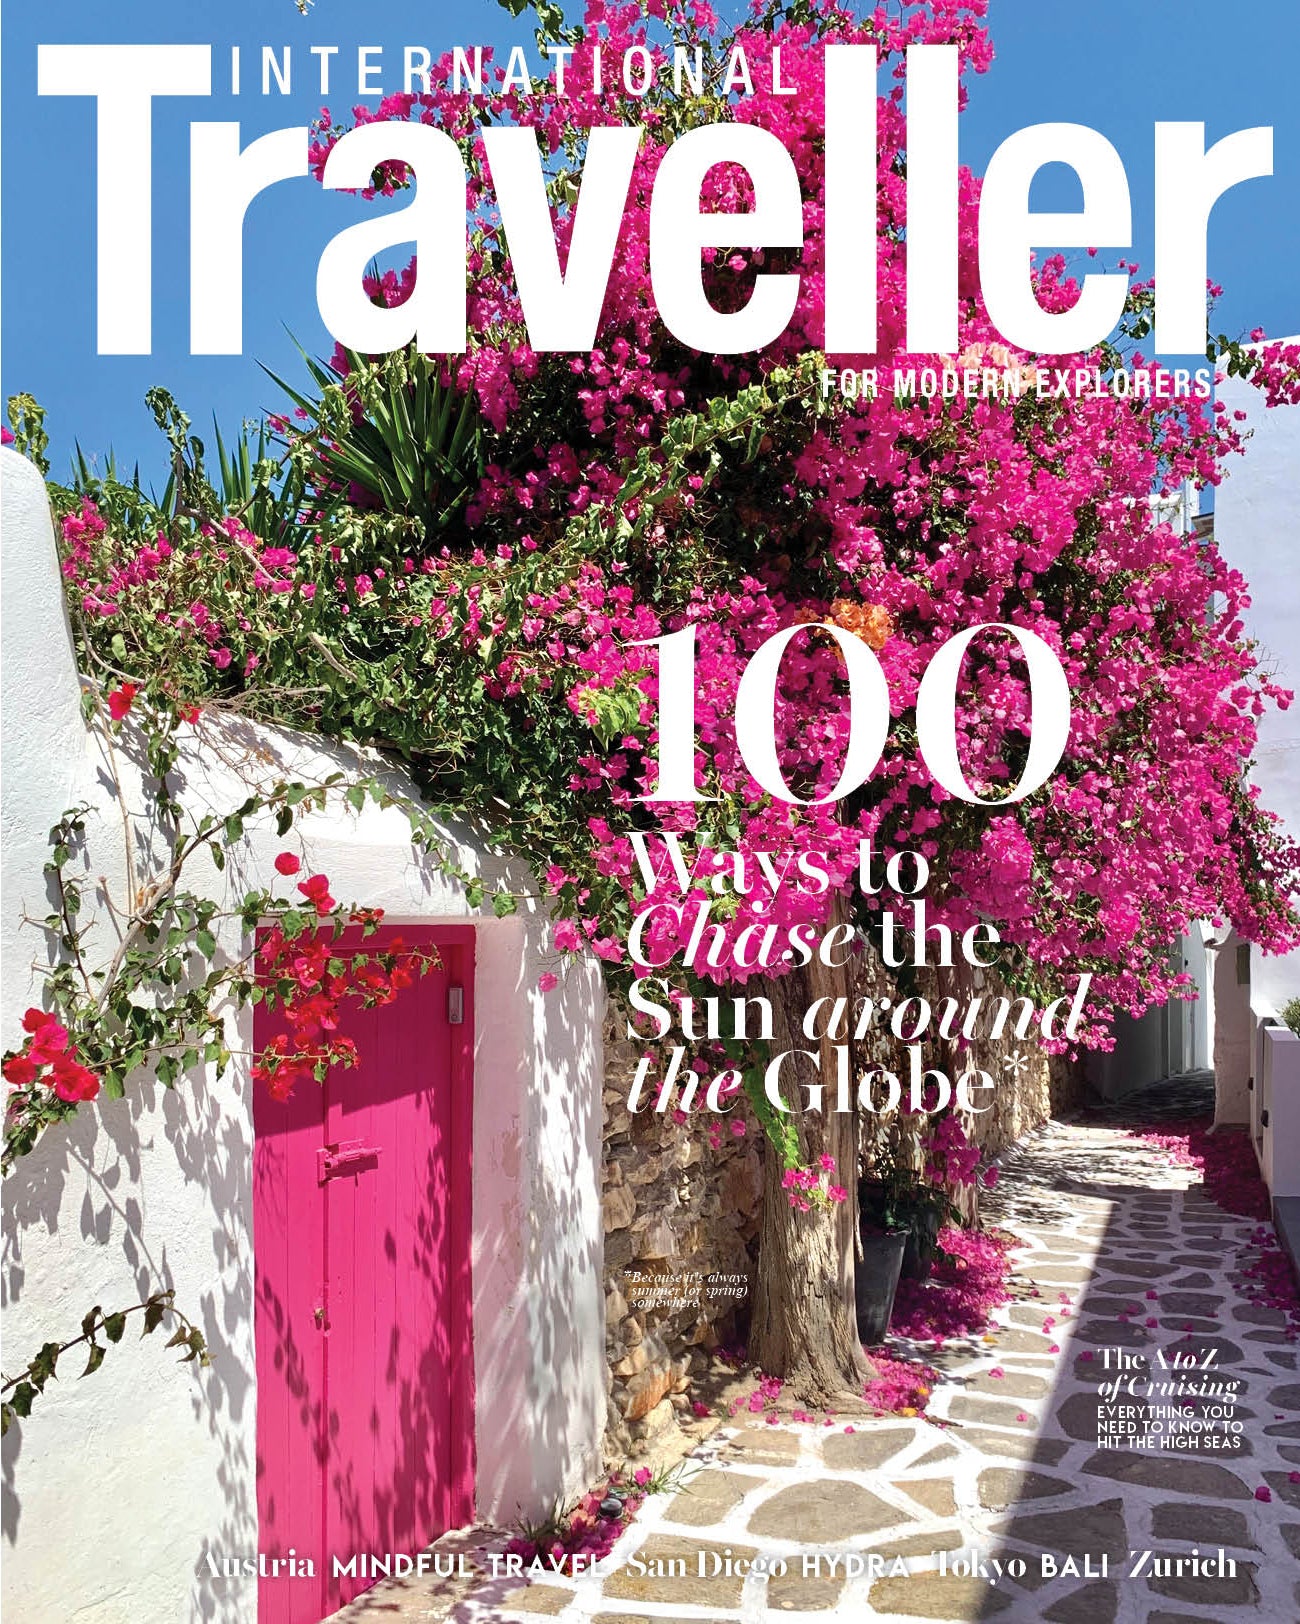 International Traveller issue 44